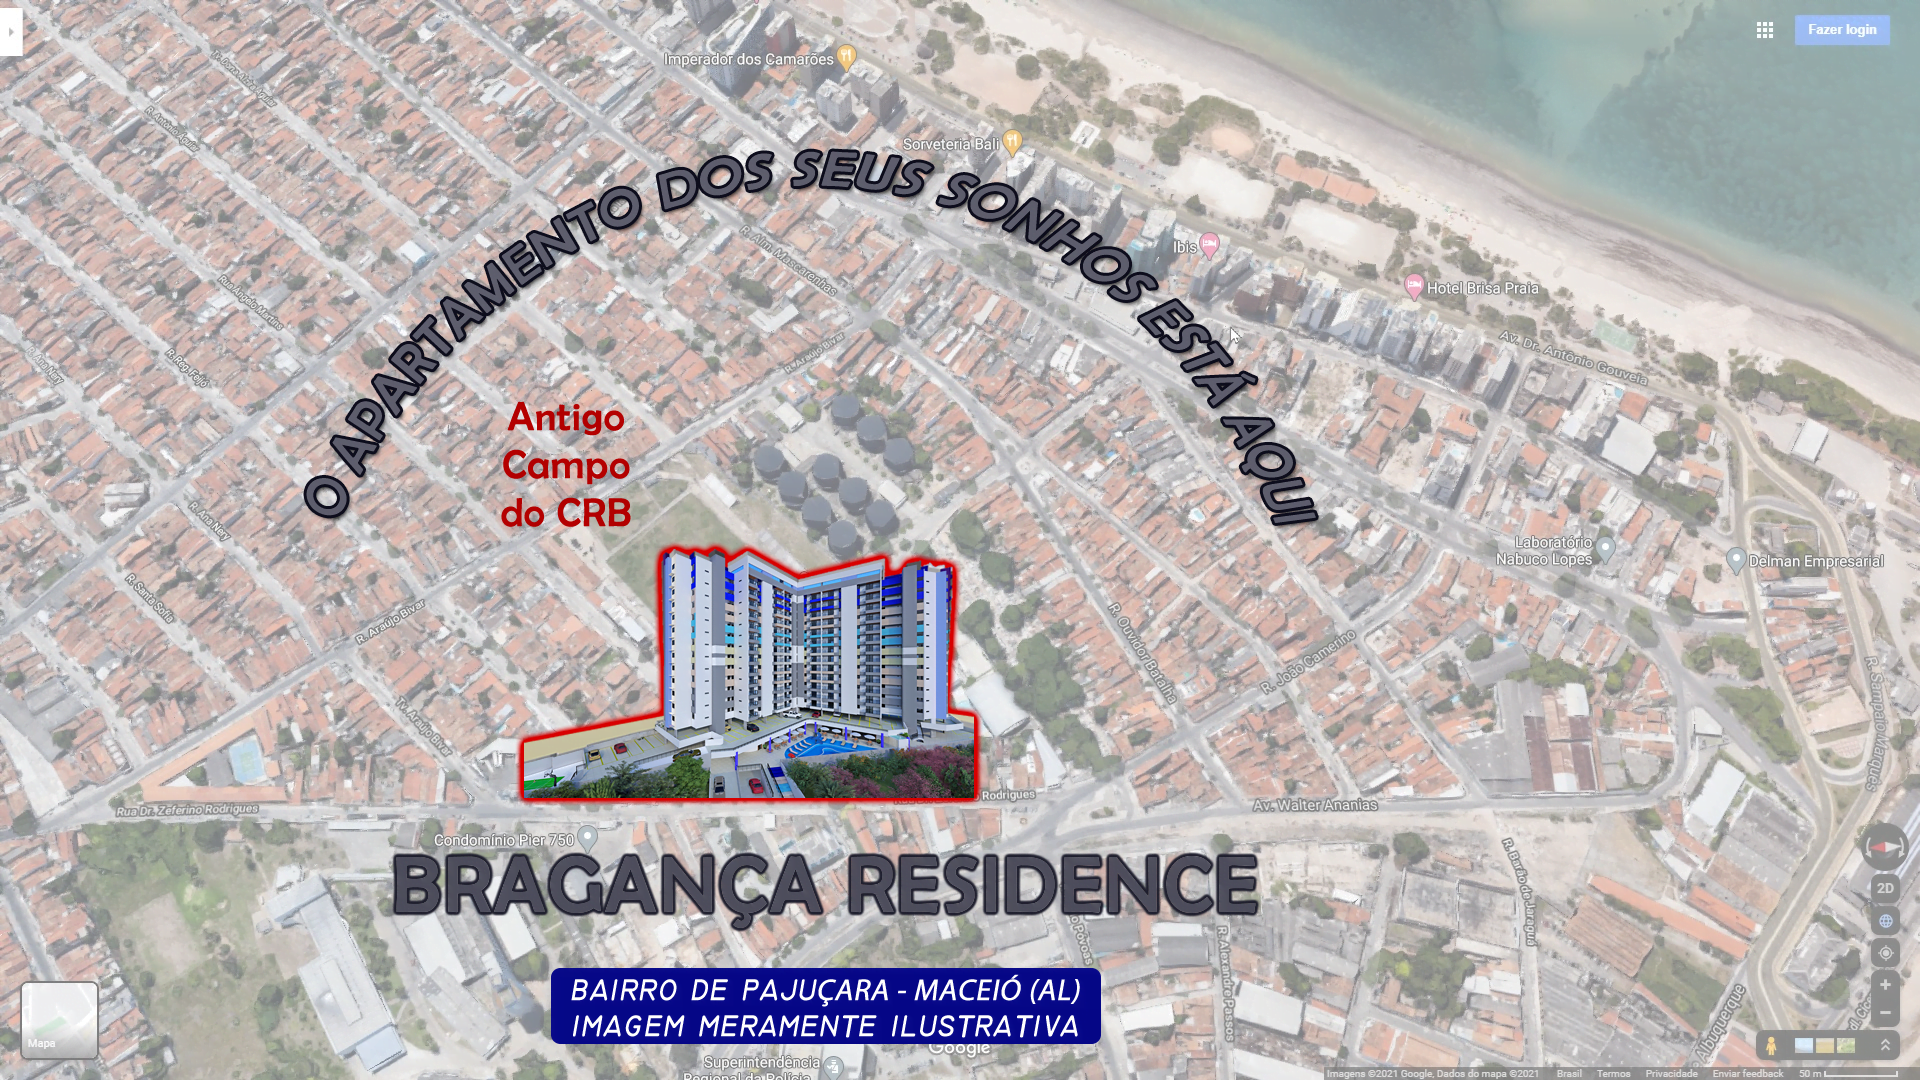 Bragança Residence - Maceió (AL)